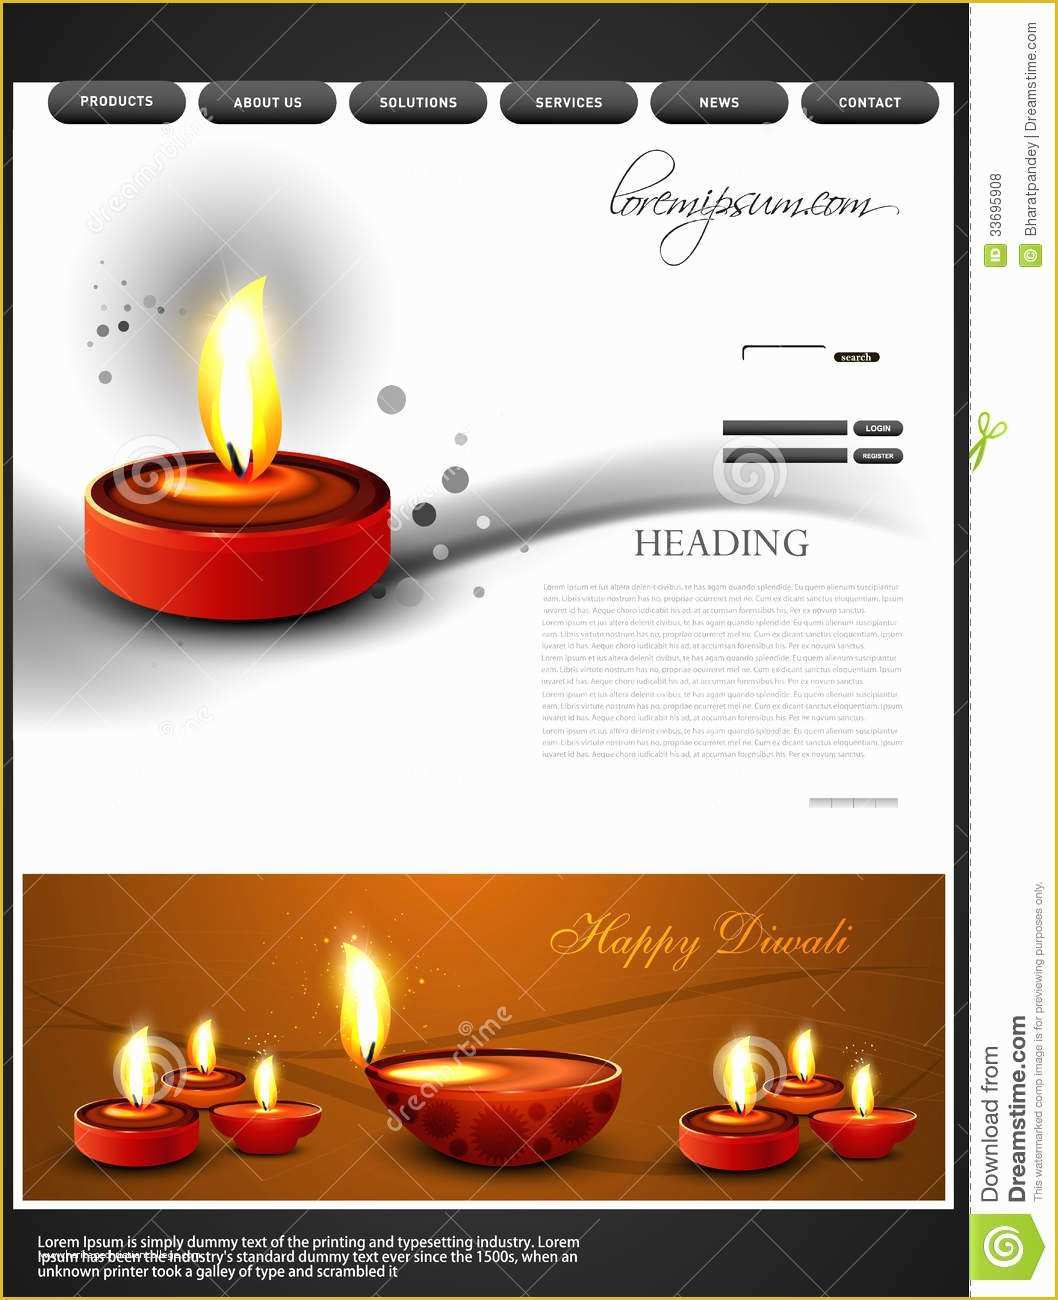 Copyright Free Website Templates Of Beautiful Happy Diwali Colorful Hindu Festival Web Stock